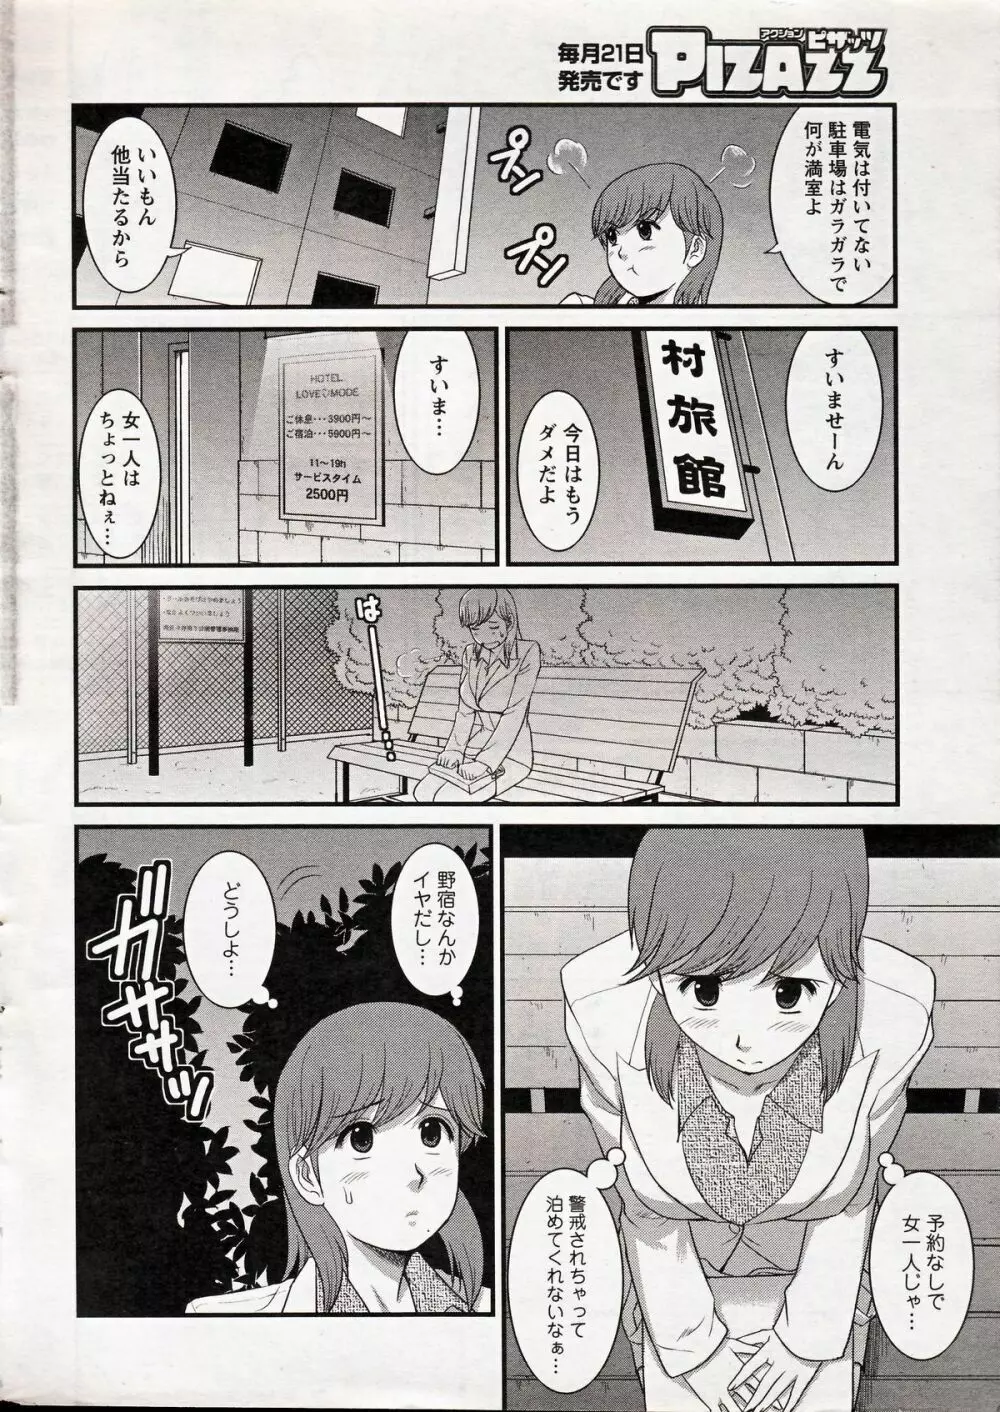 Haken no Muuko-san 15 8ページ